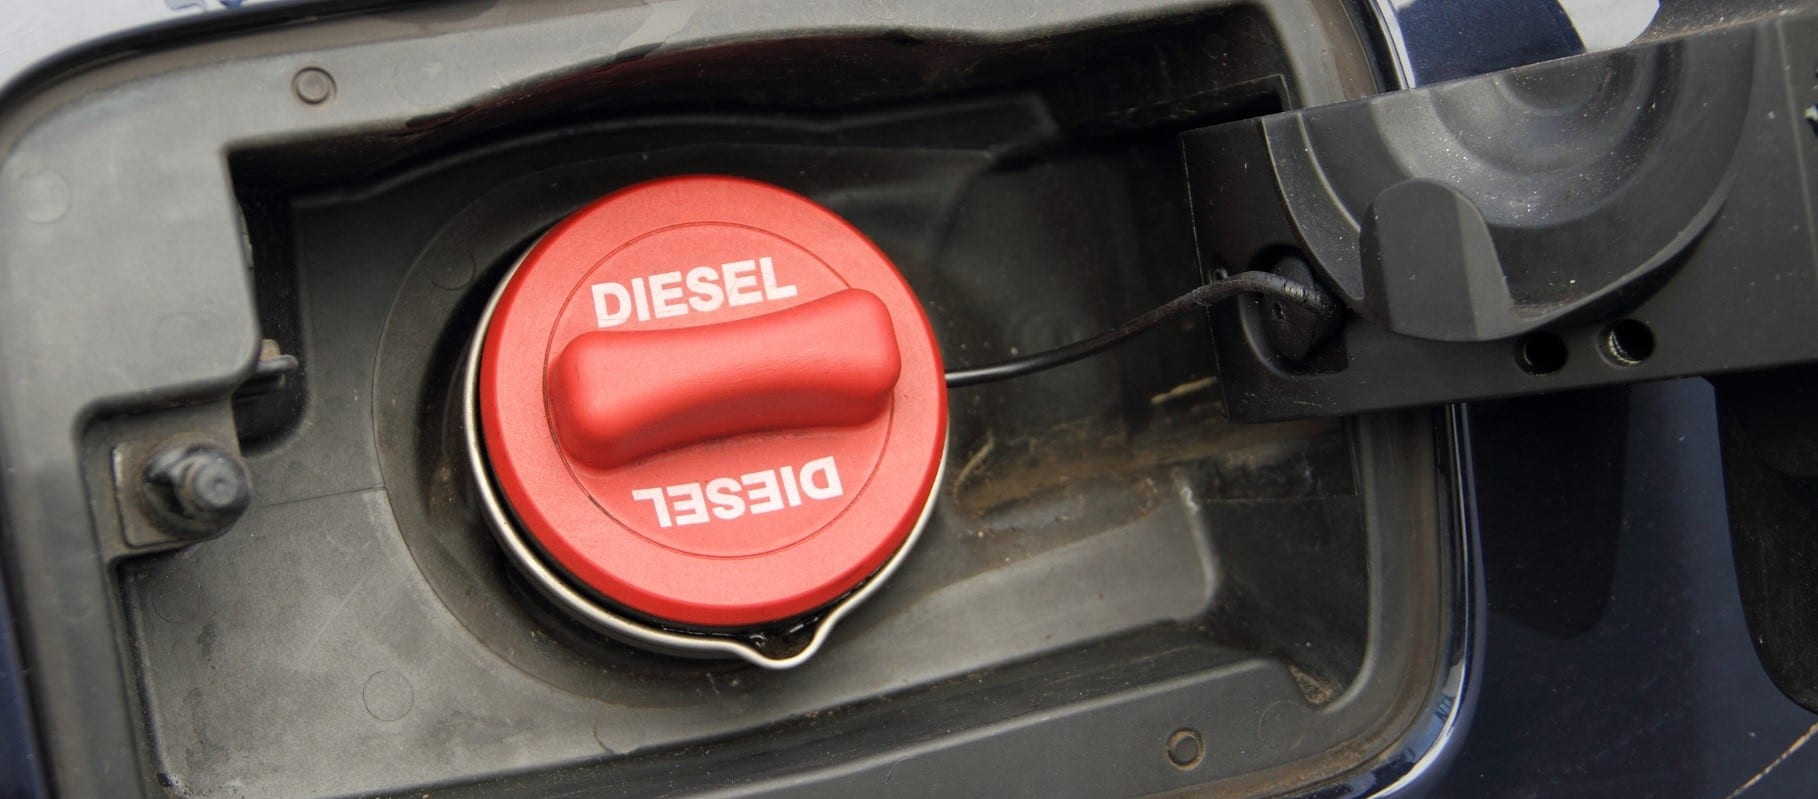 can you run kerosene in a diesel engine